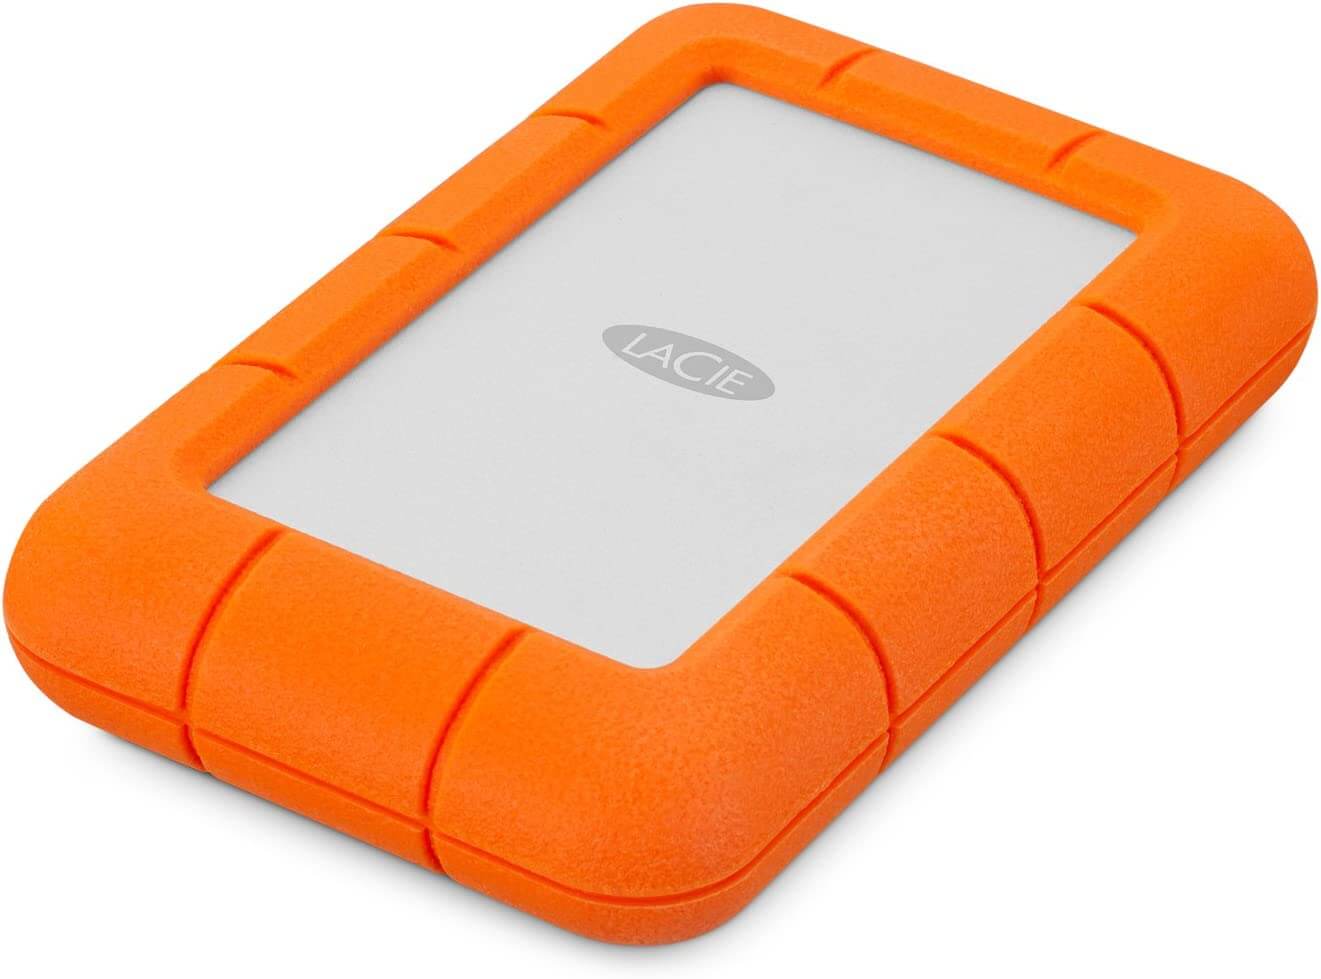 white hard drive with orange case